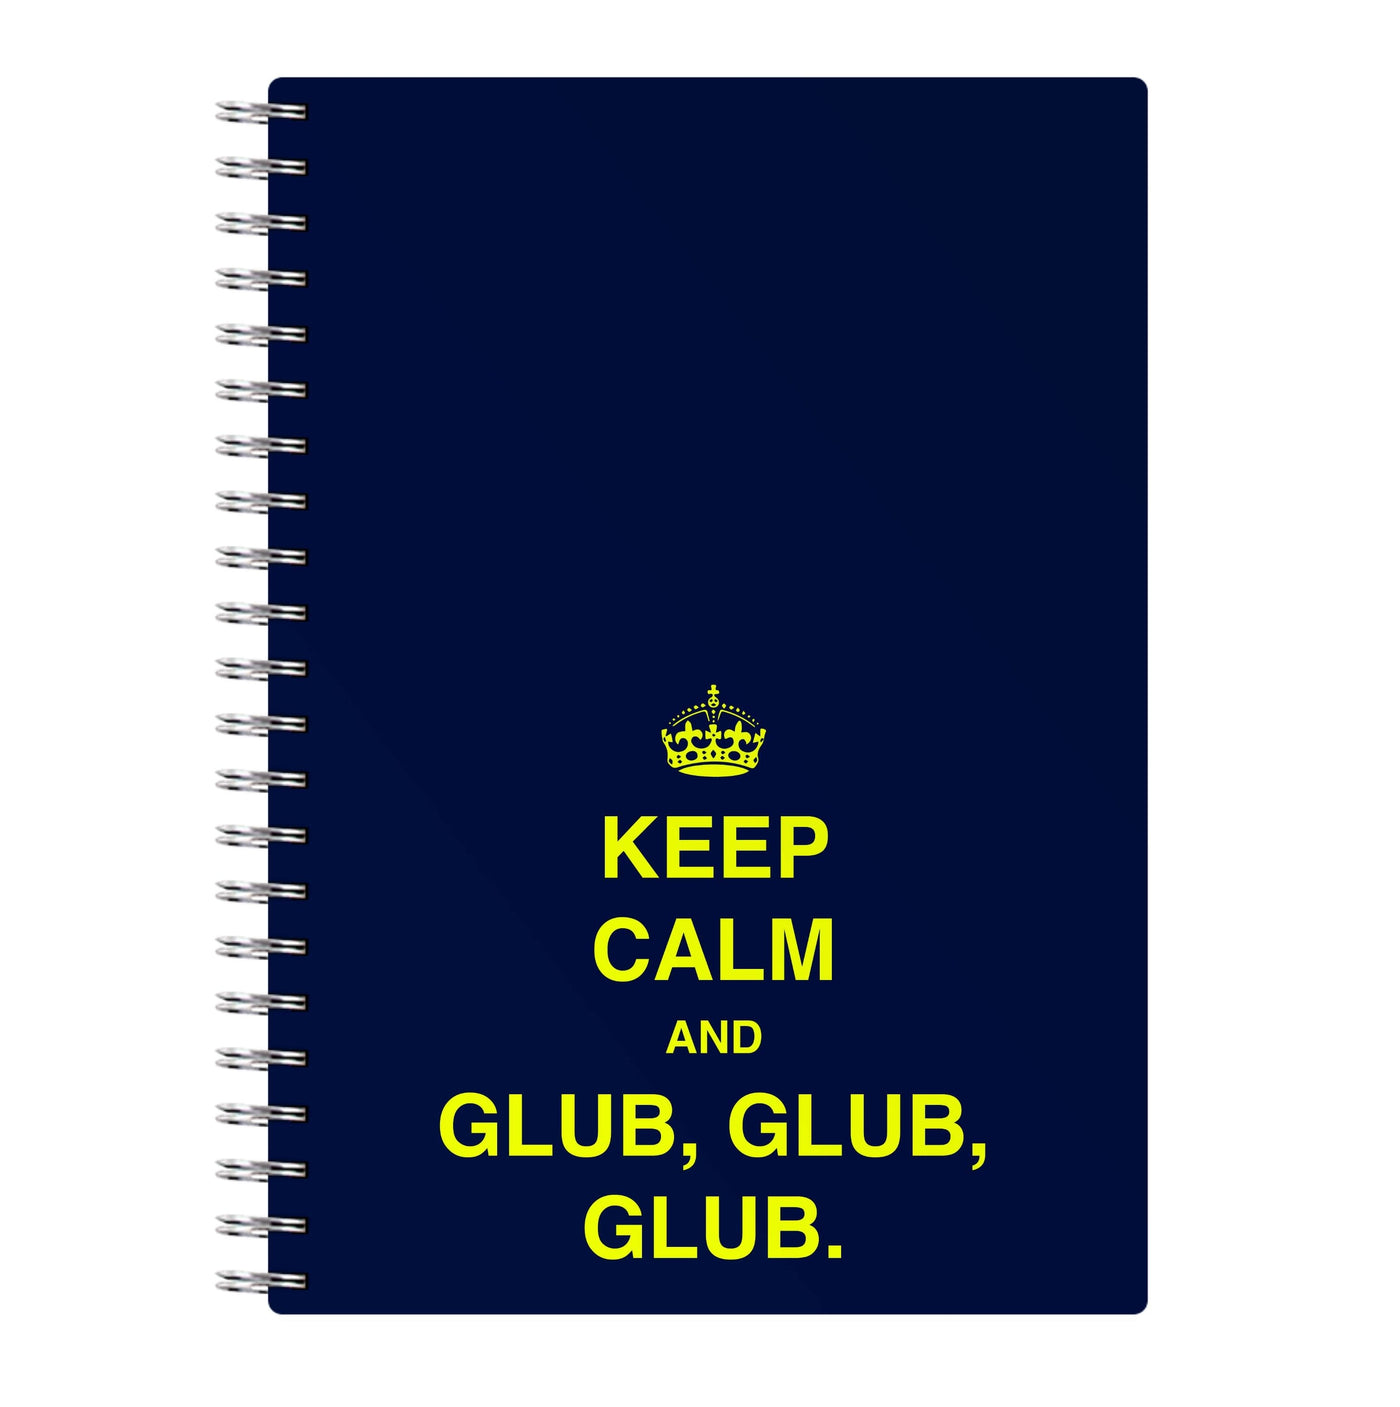 Keep Calm And Glub Glub - Brooklyn Nine-Nine Notebook